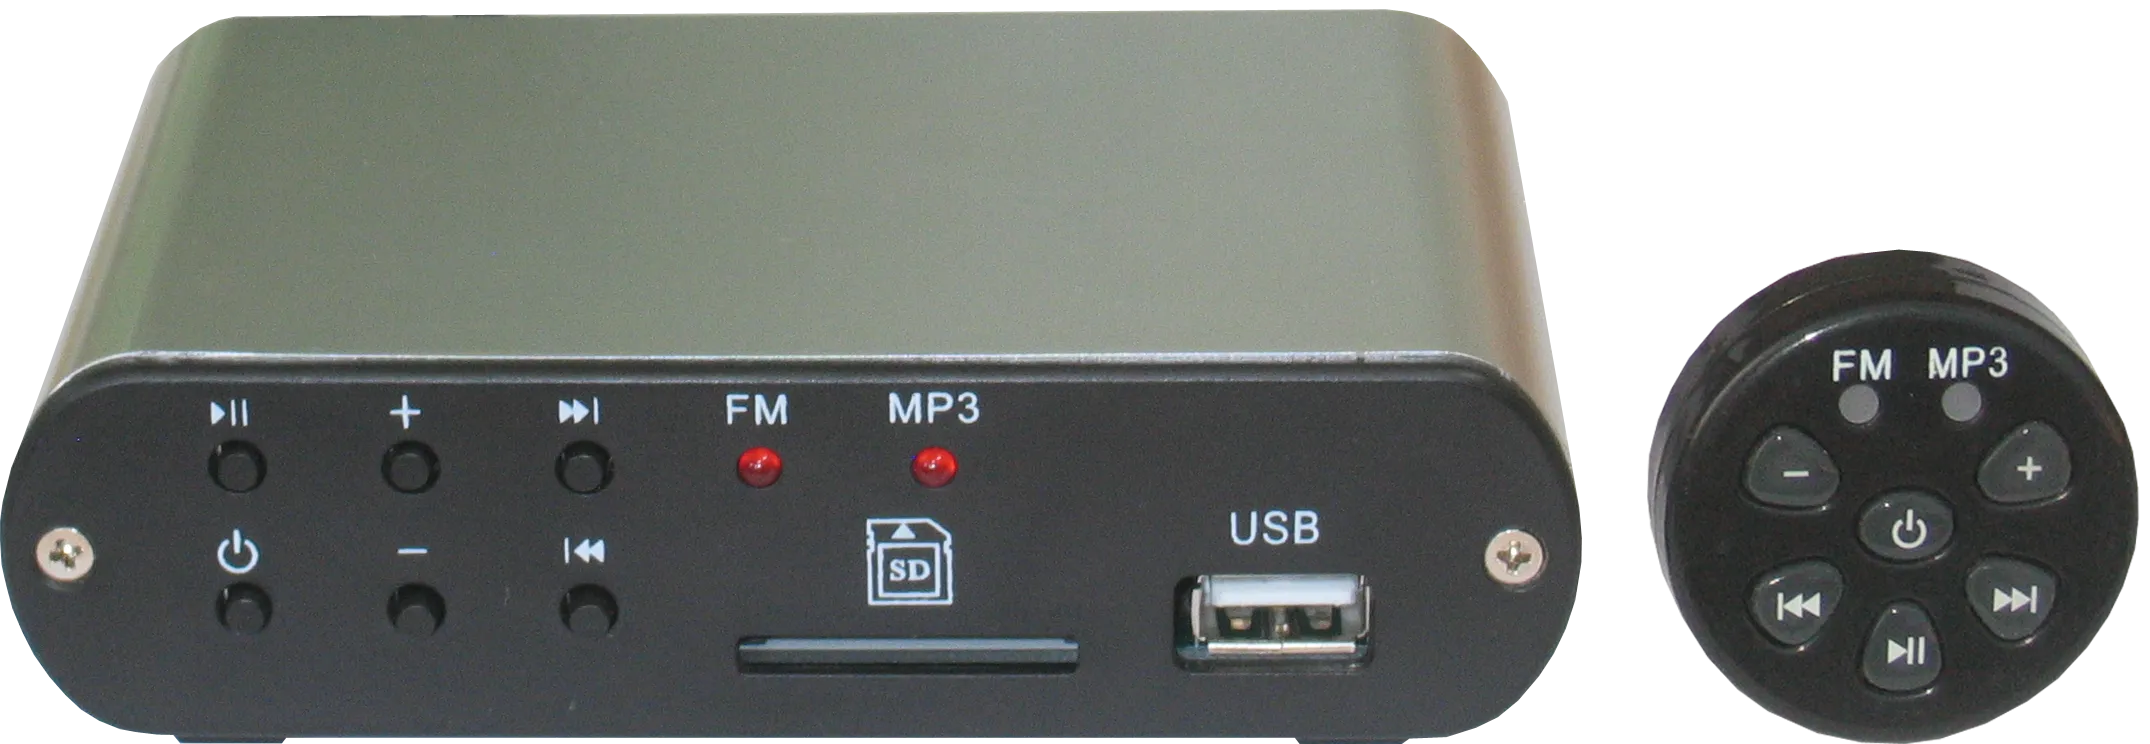 MP3-Radio